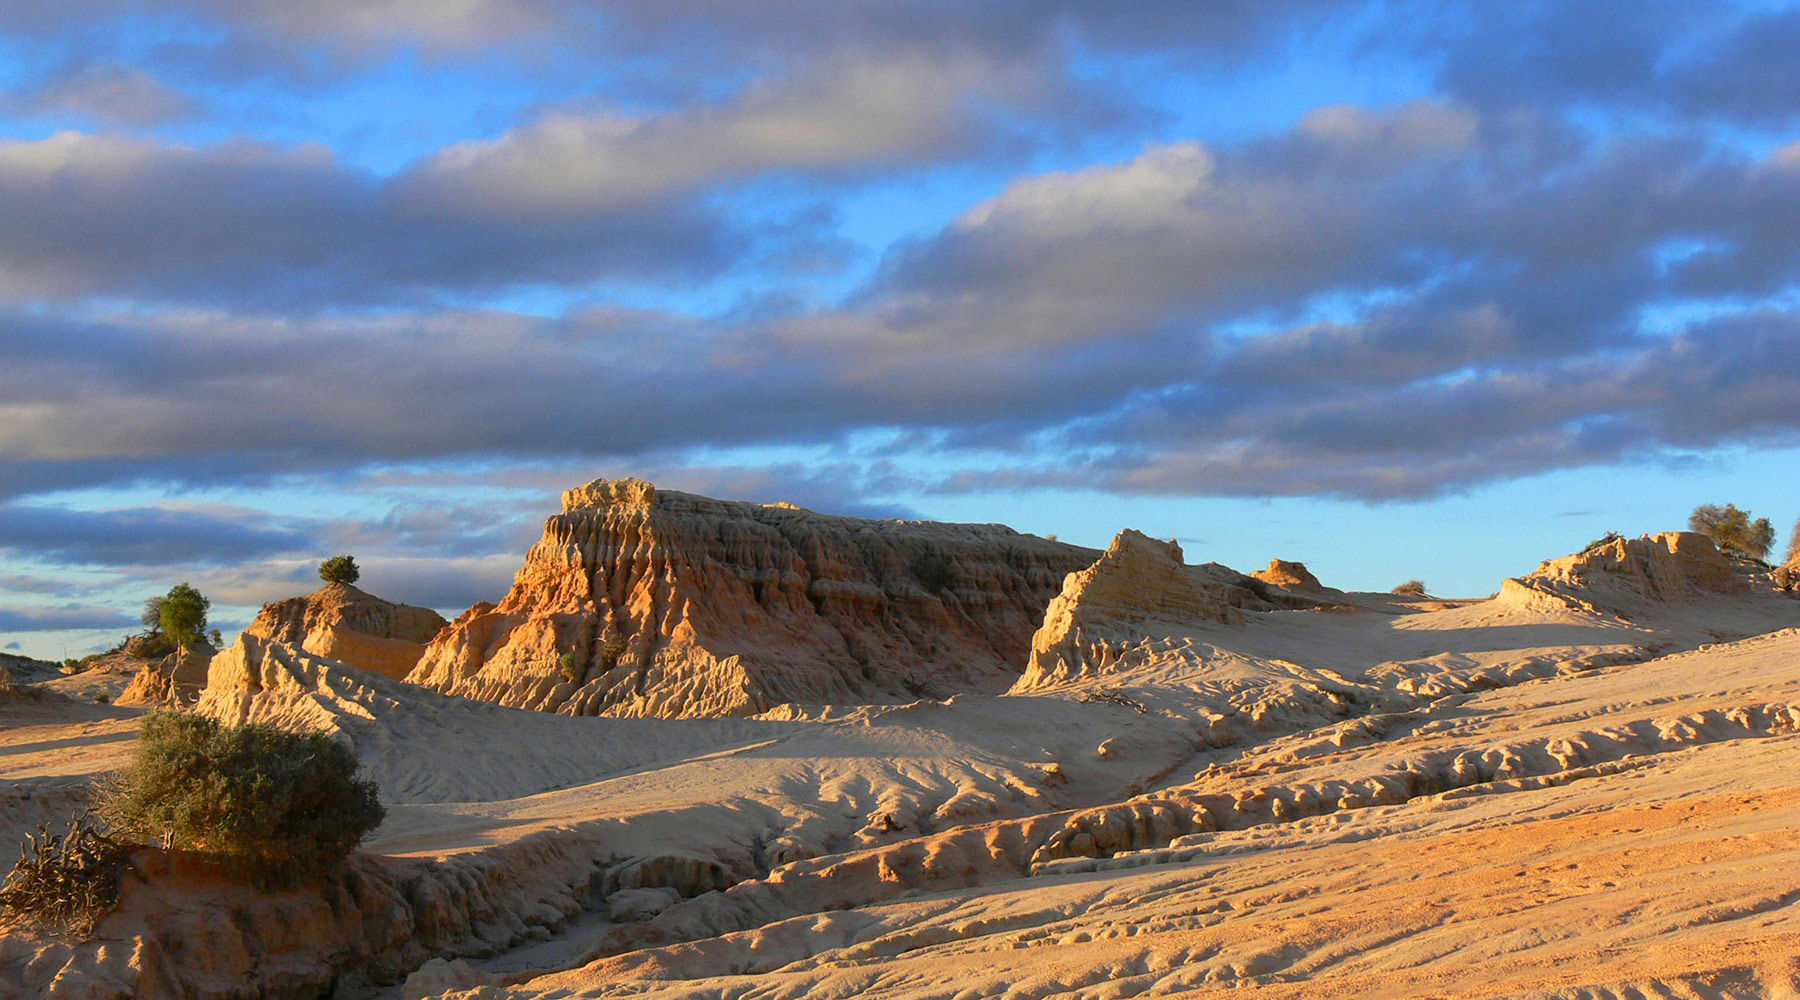 Mungo National Park - sand dune structures at sunset